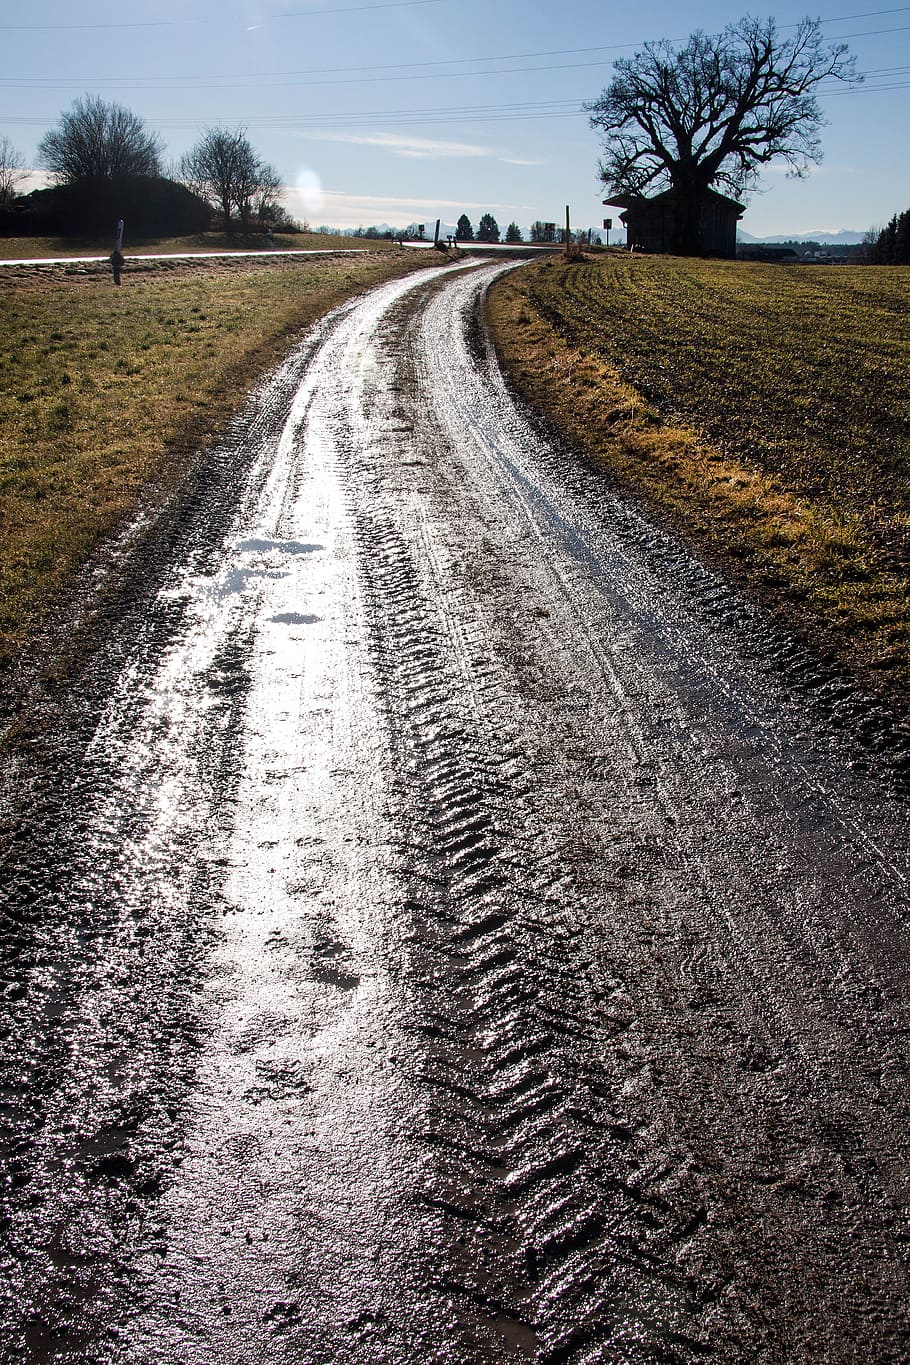 Tire, Tracks, Puddles, Arable, Dirt, lane, tire tracks, mud, road, dirt road